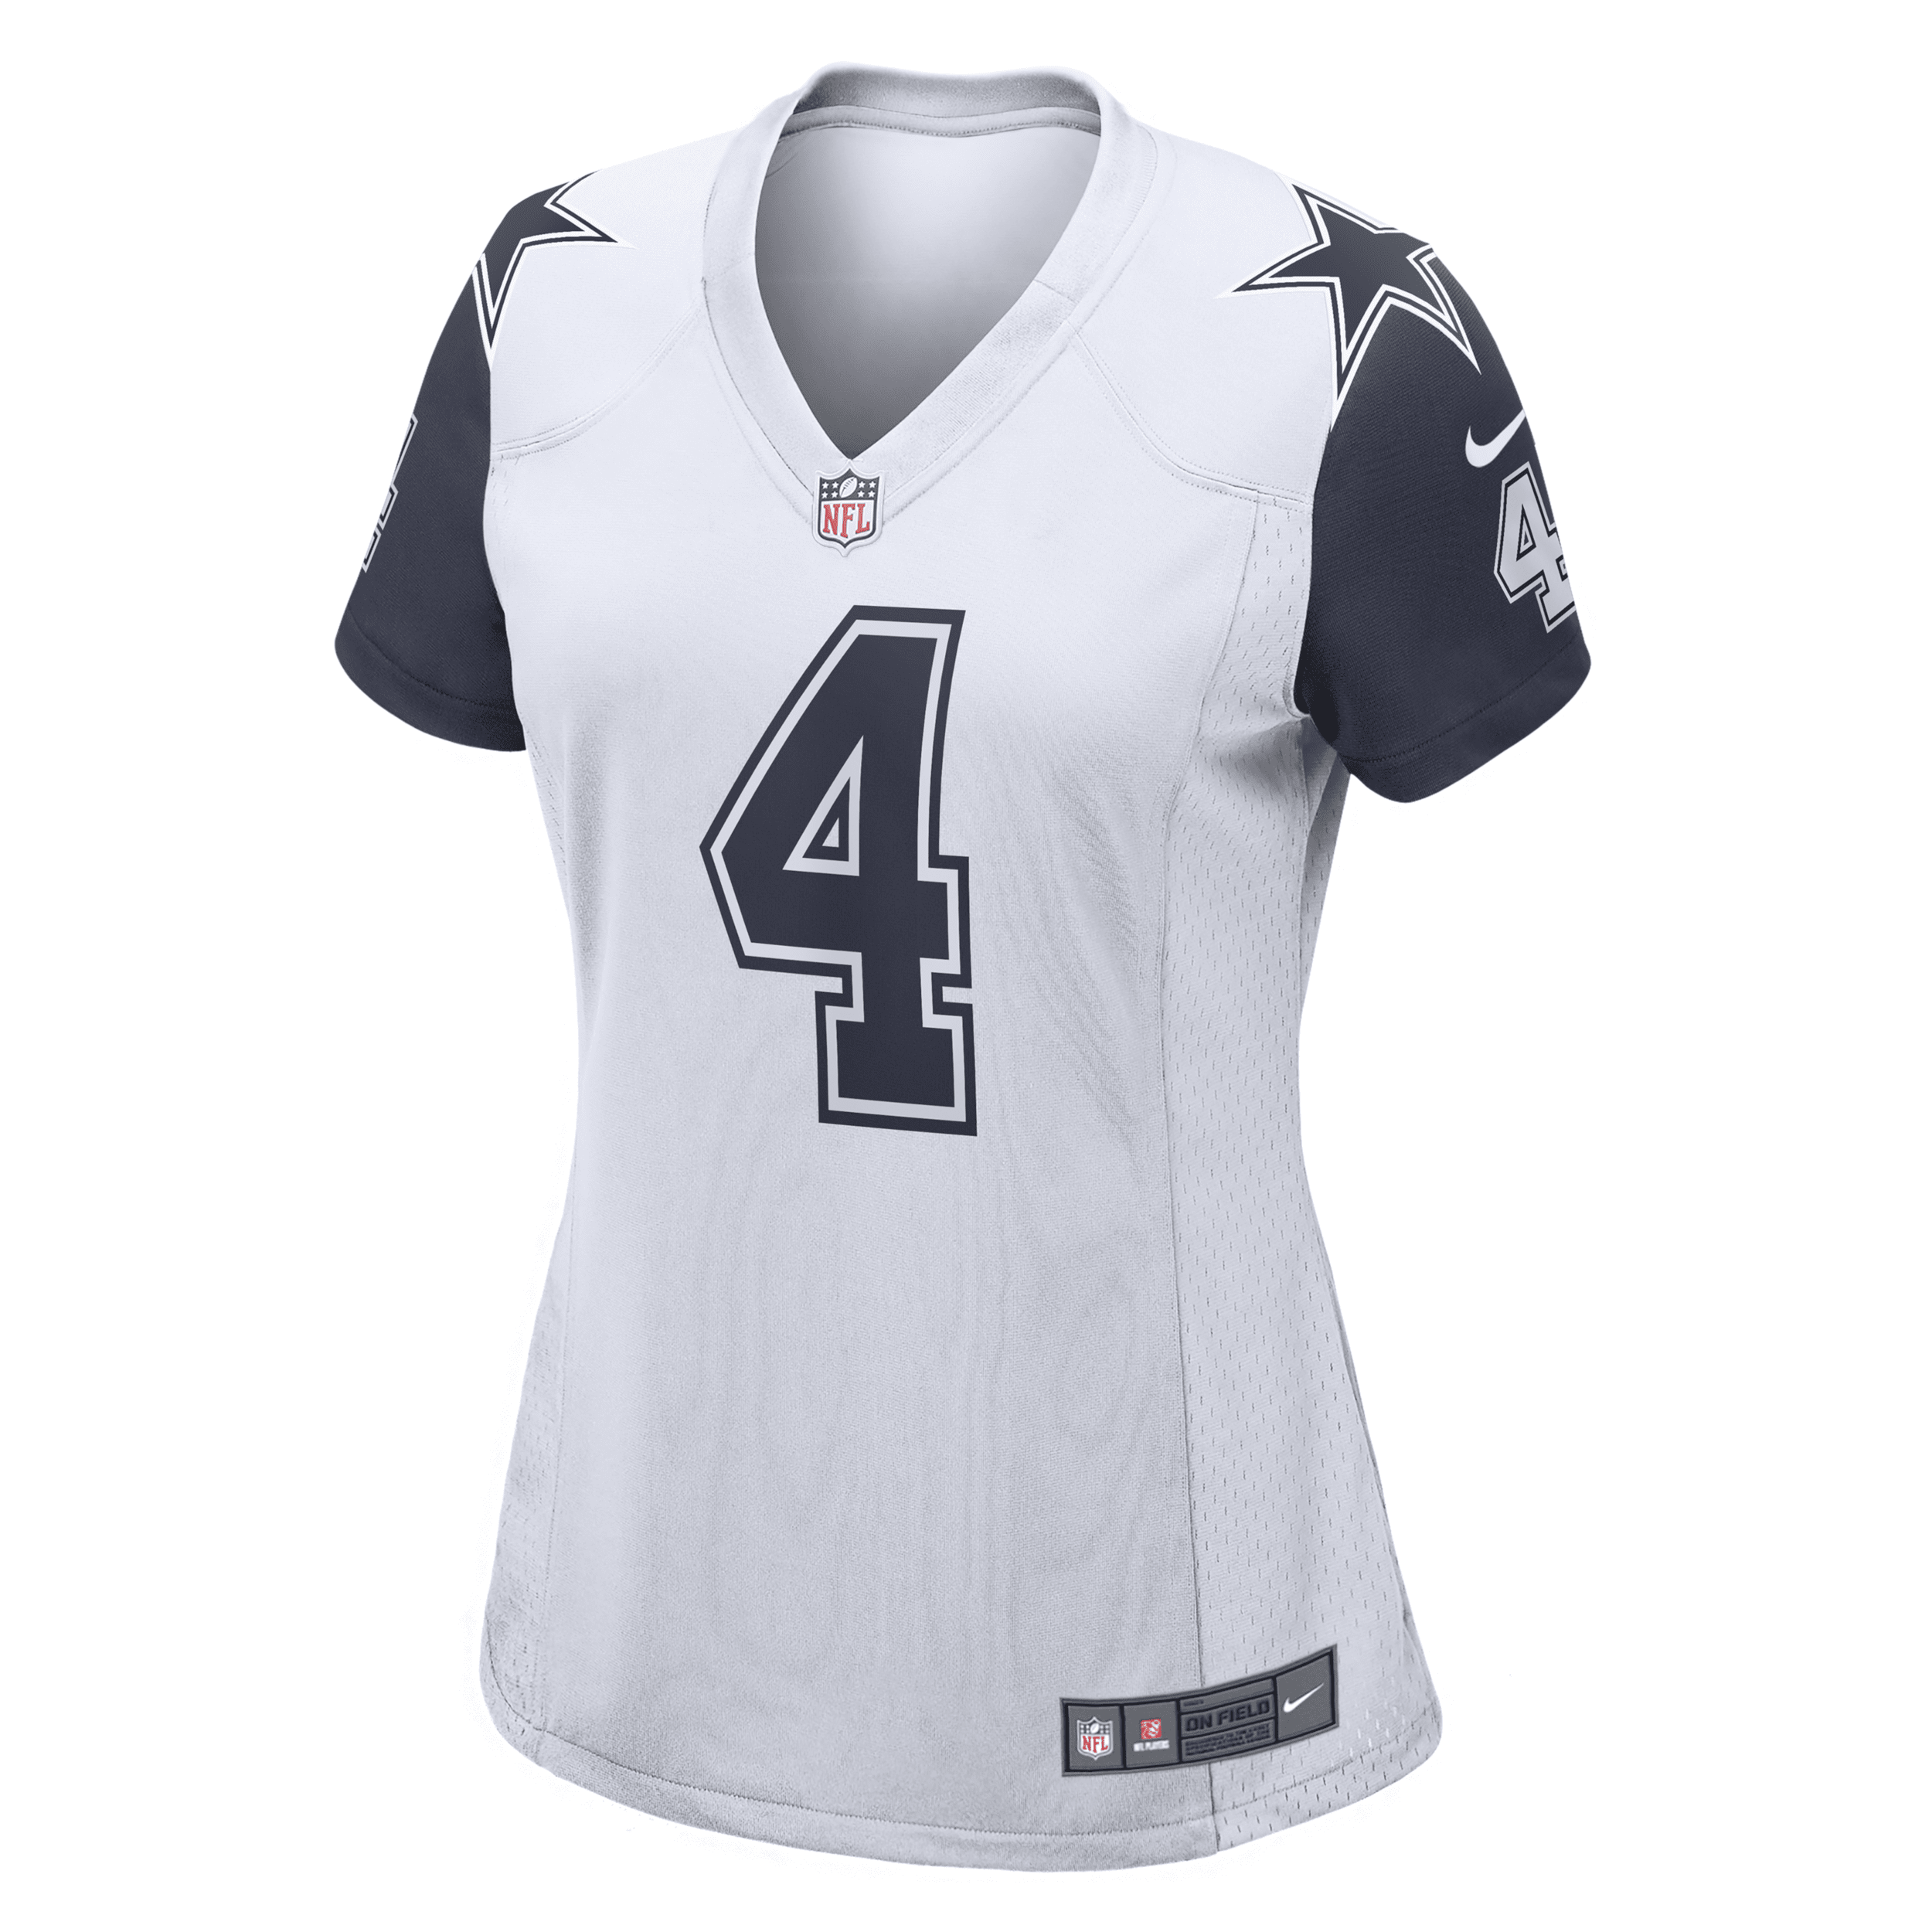 Shop Nike Women's Nfl Dallas Cowboys (dak Prescott) Game Football Jersey In White